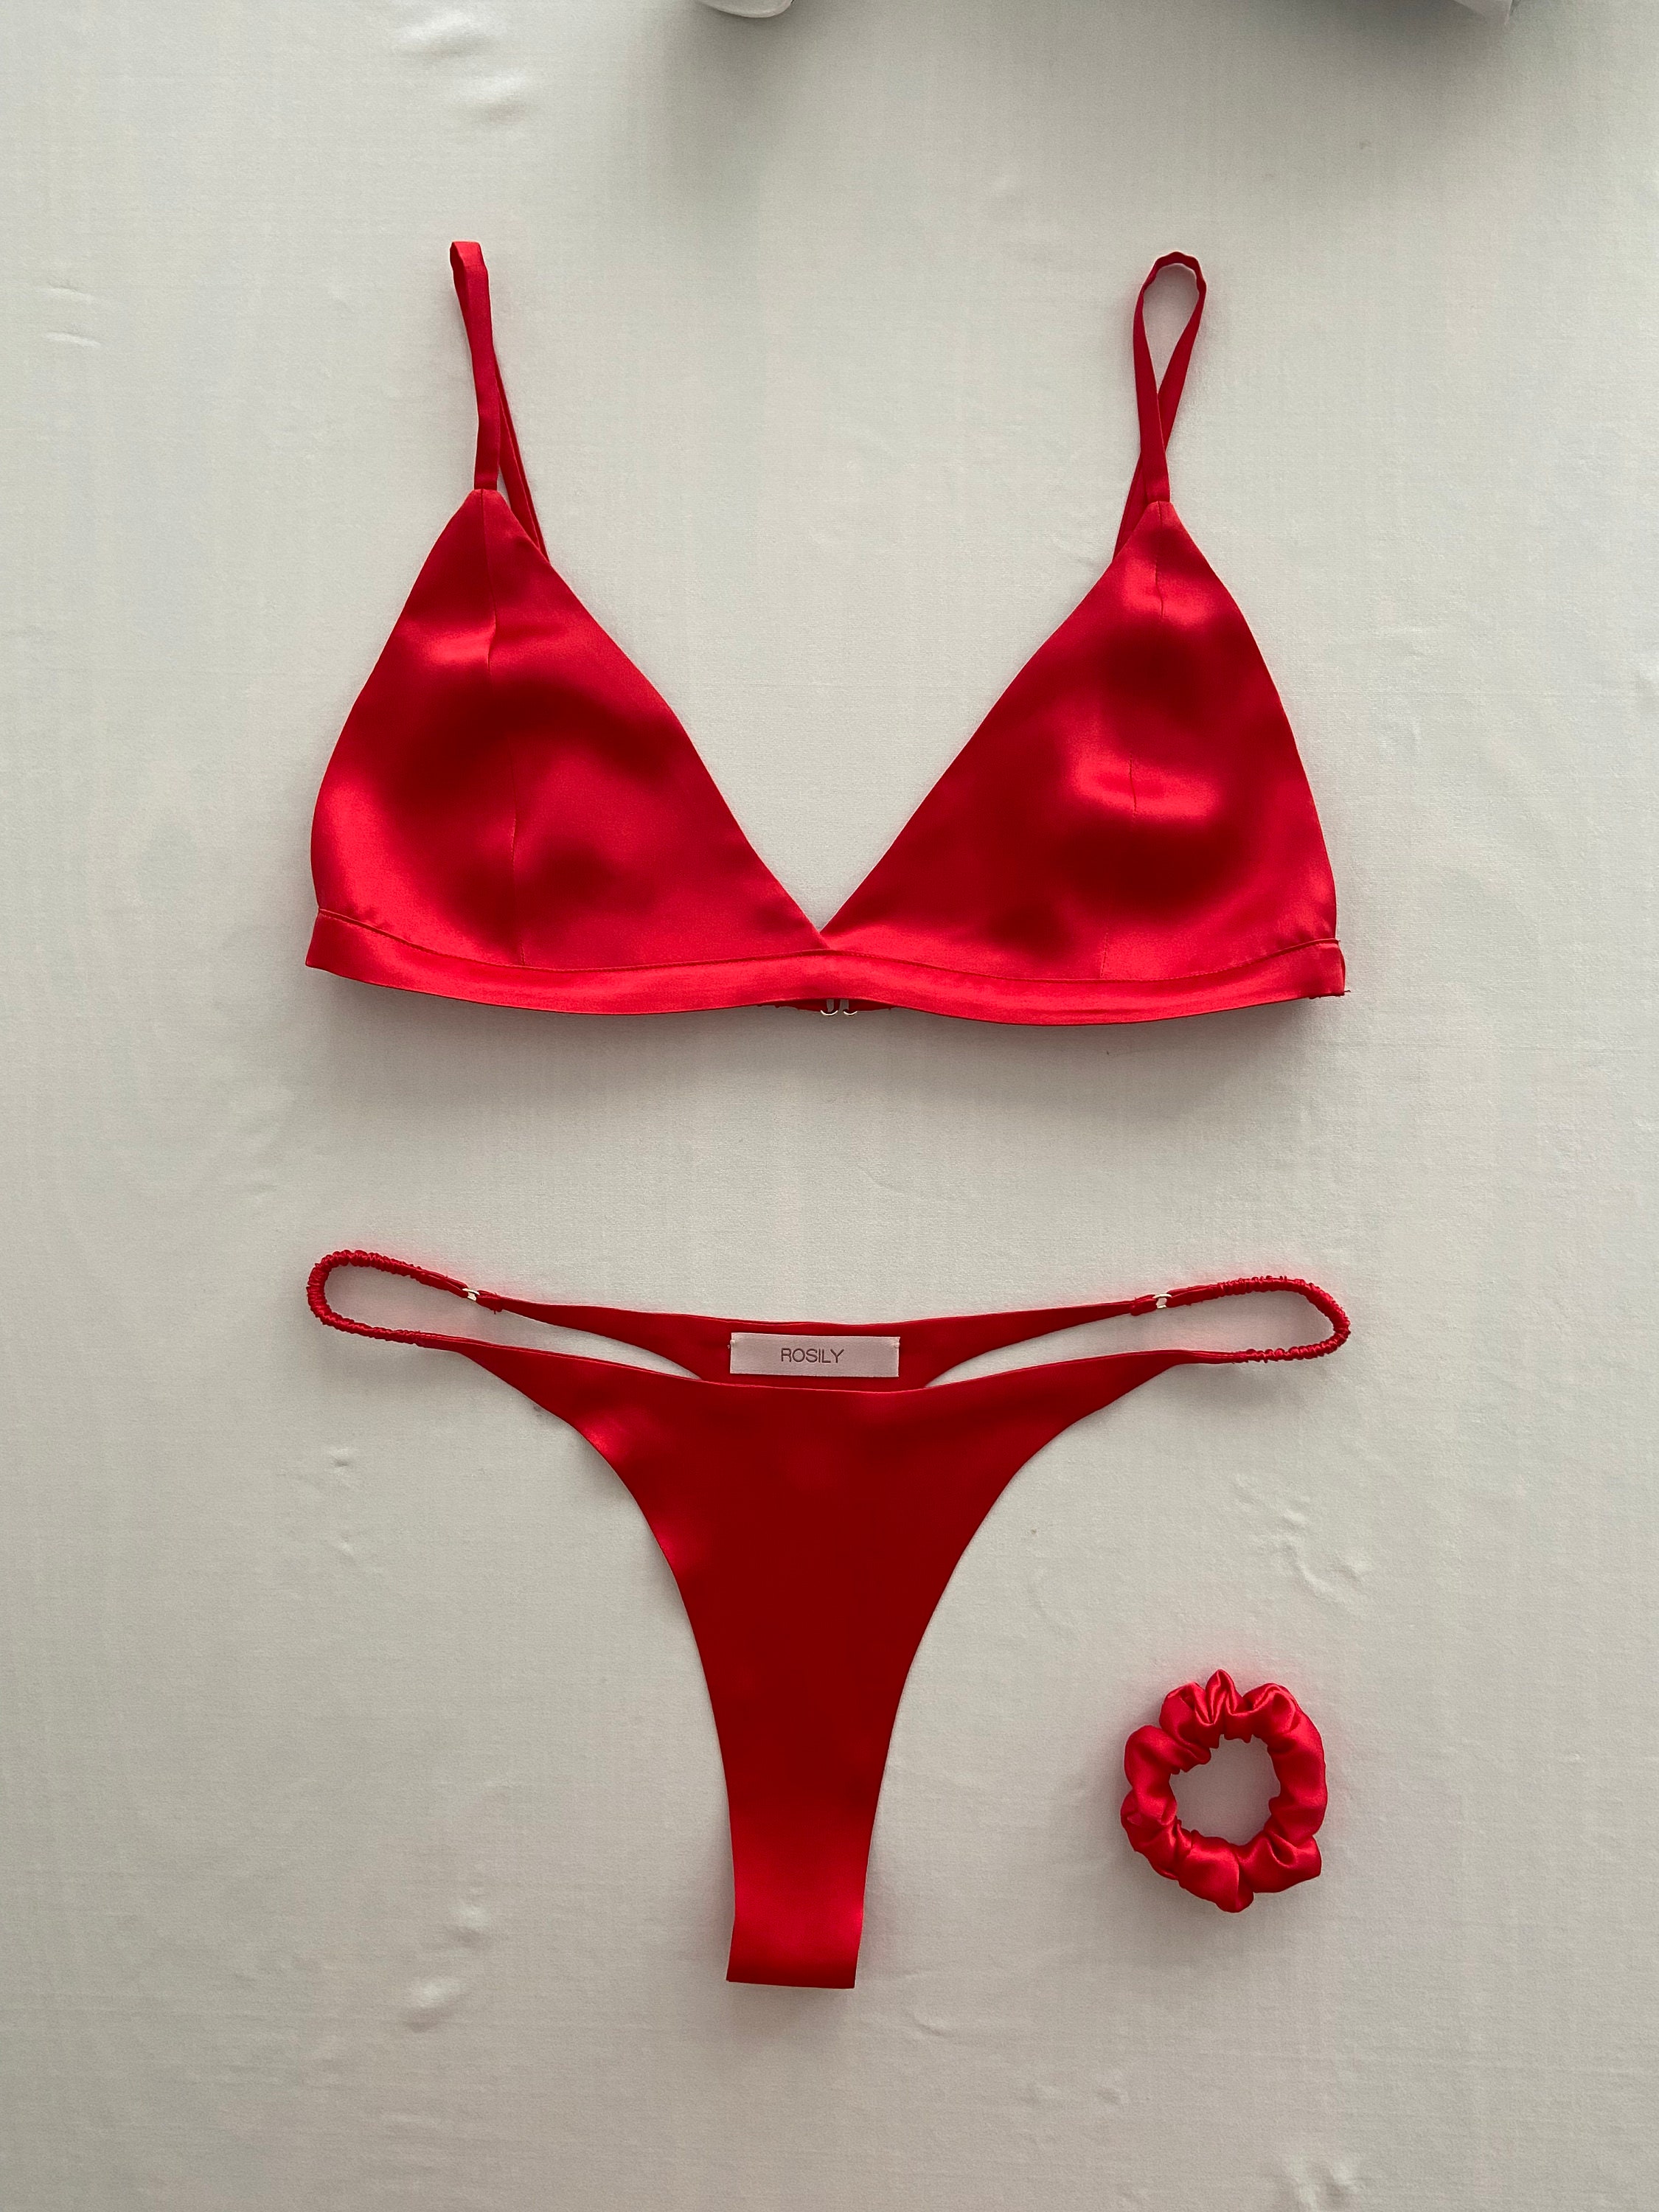 Sexy Red Cut-Out Open-Cup Bra Bralette Underwear Set Plus Size 8-22  Lingerie 